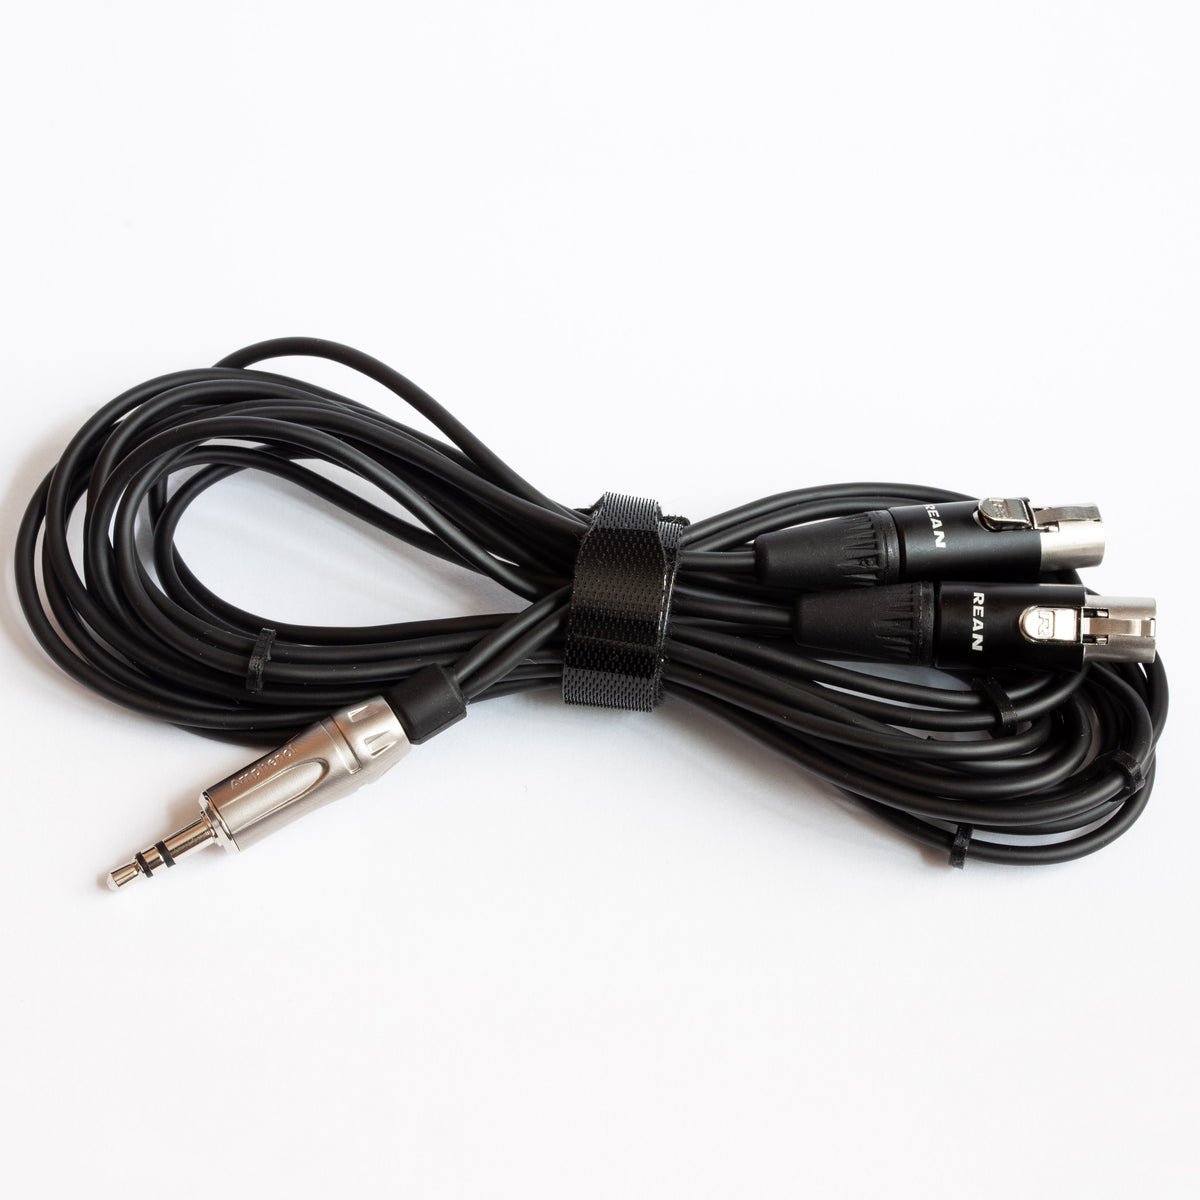 Mod. 1196-5. Cable micrófono estéreo balanceado. 5m